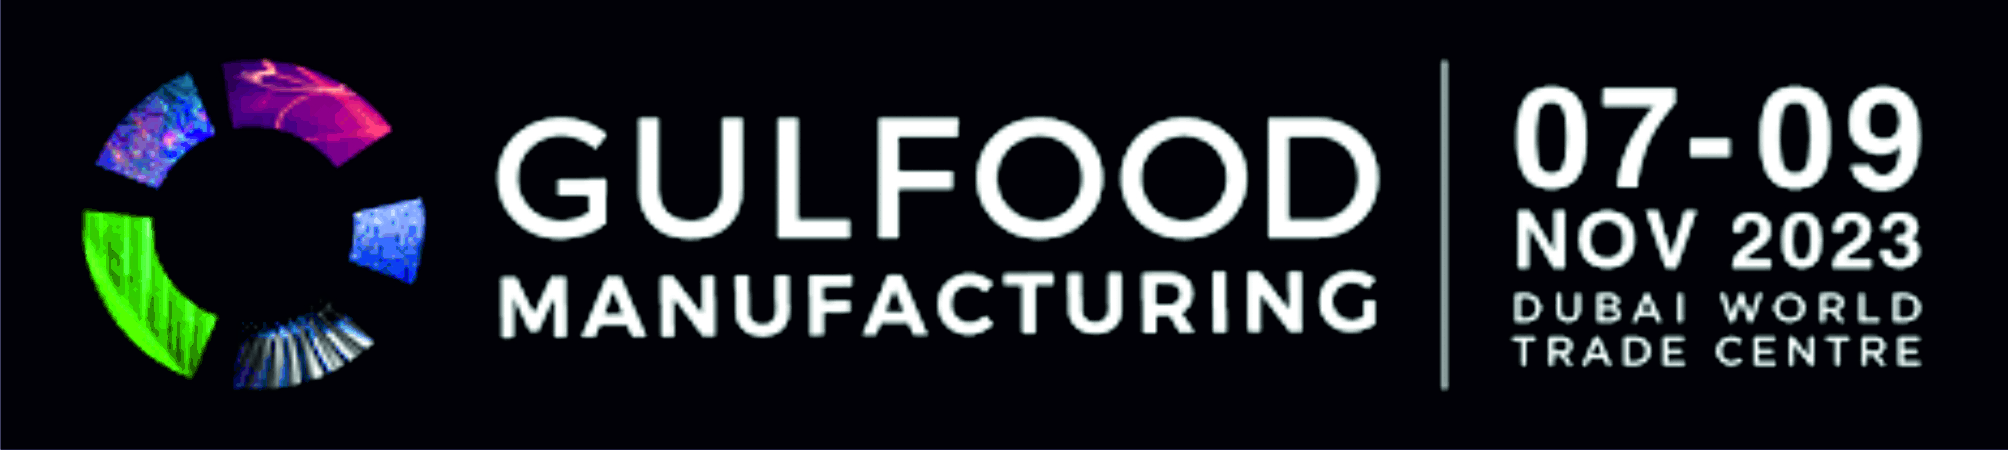 Gulfood Manufacturing 2023 Dubai /VAE